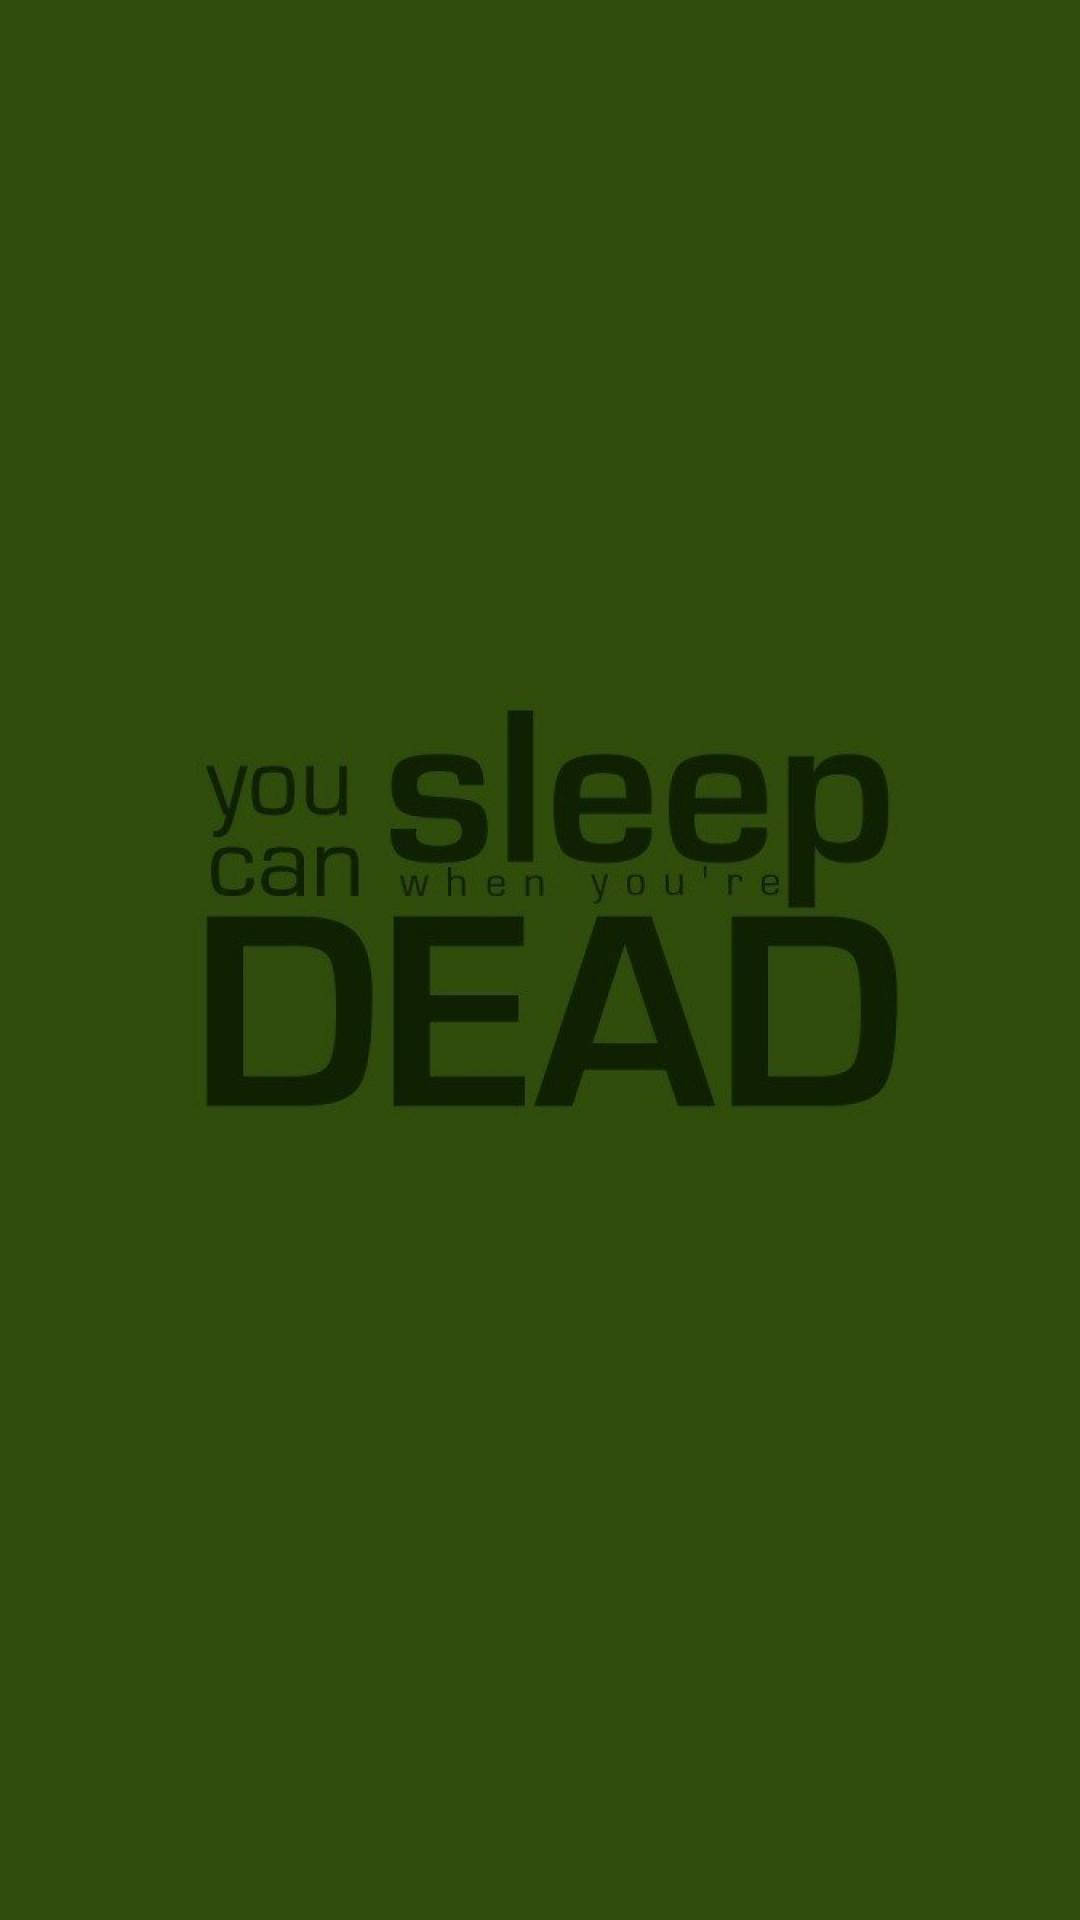 Sleep When You’re Dead Quote Plain Green Wallpaper